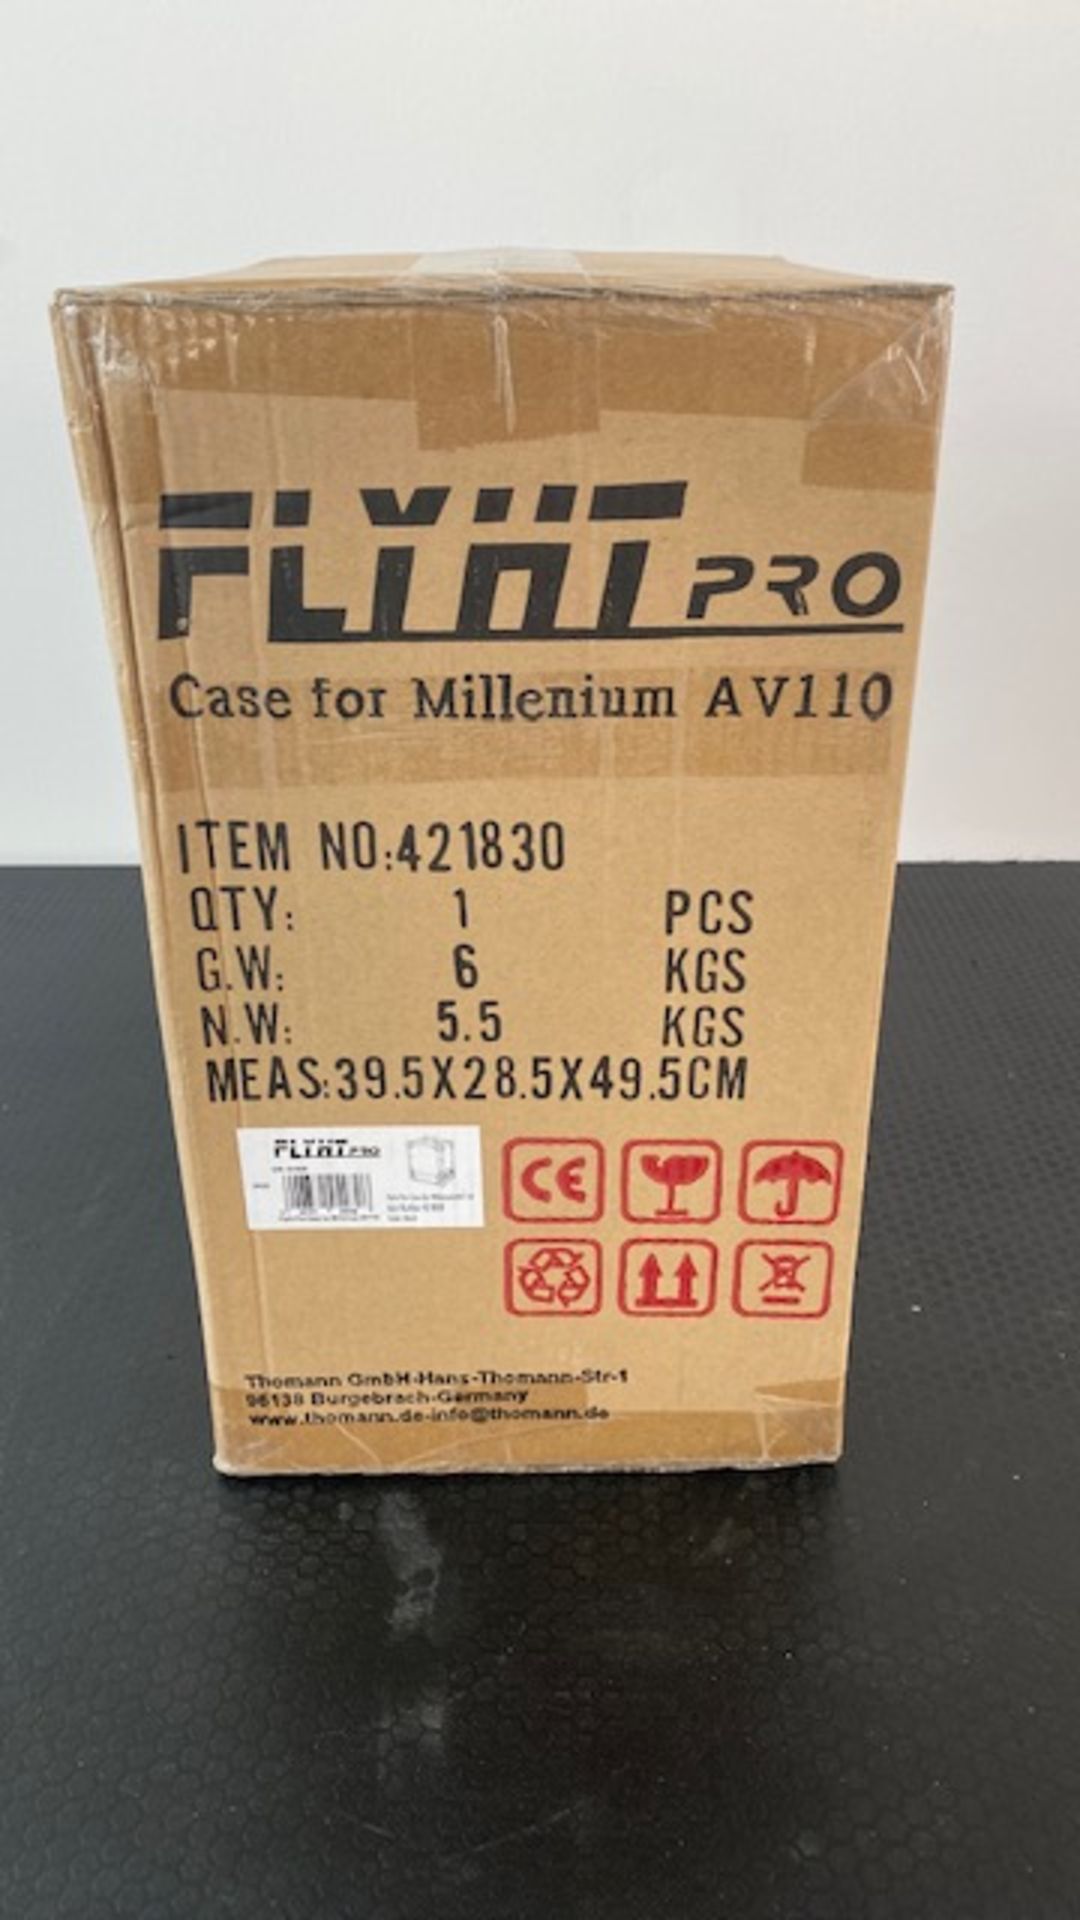 1 x FLYHT PRO Flight Case For Millenium AV110 - New / Unopened - Ref: 928 - CL581 - Image 2 of 6